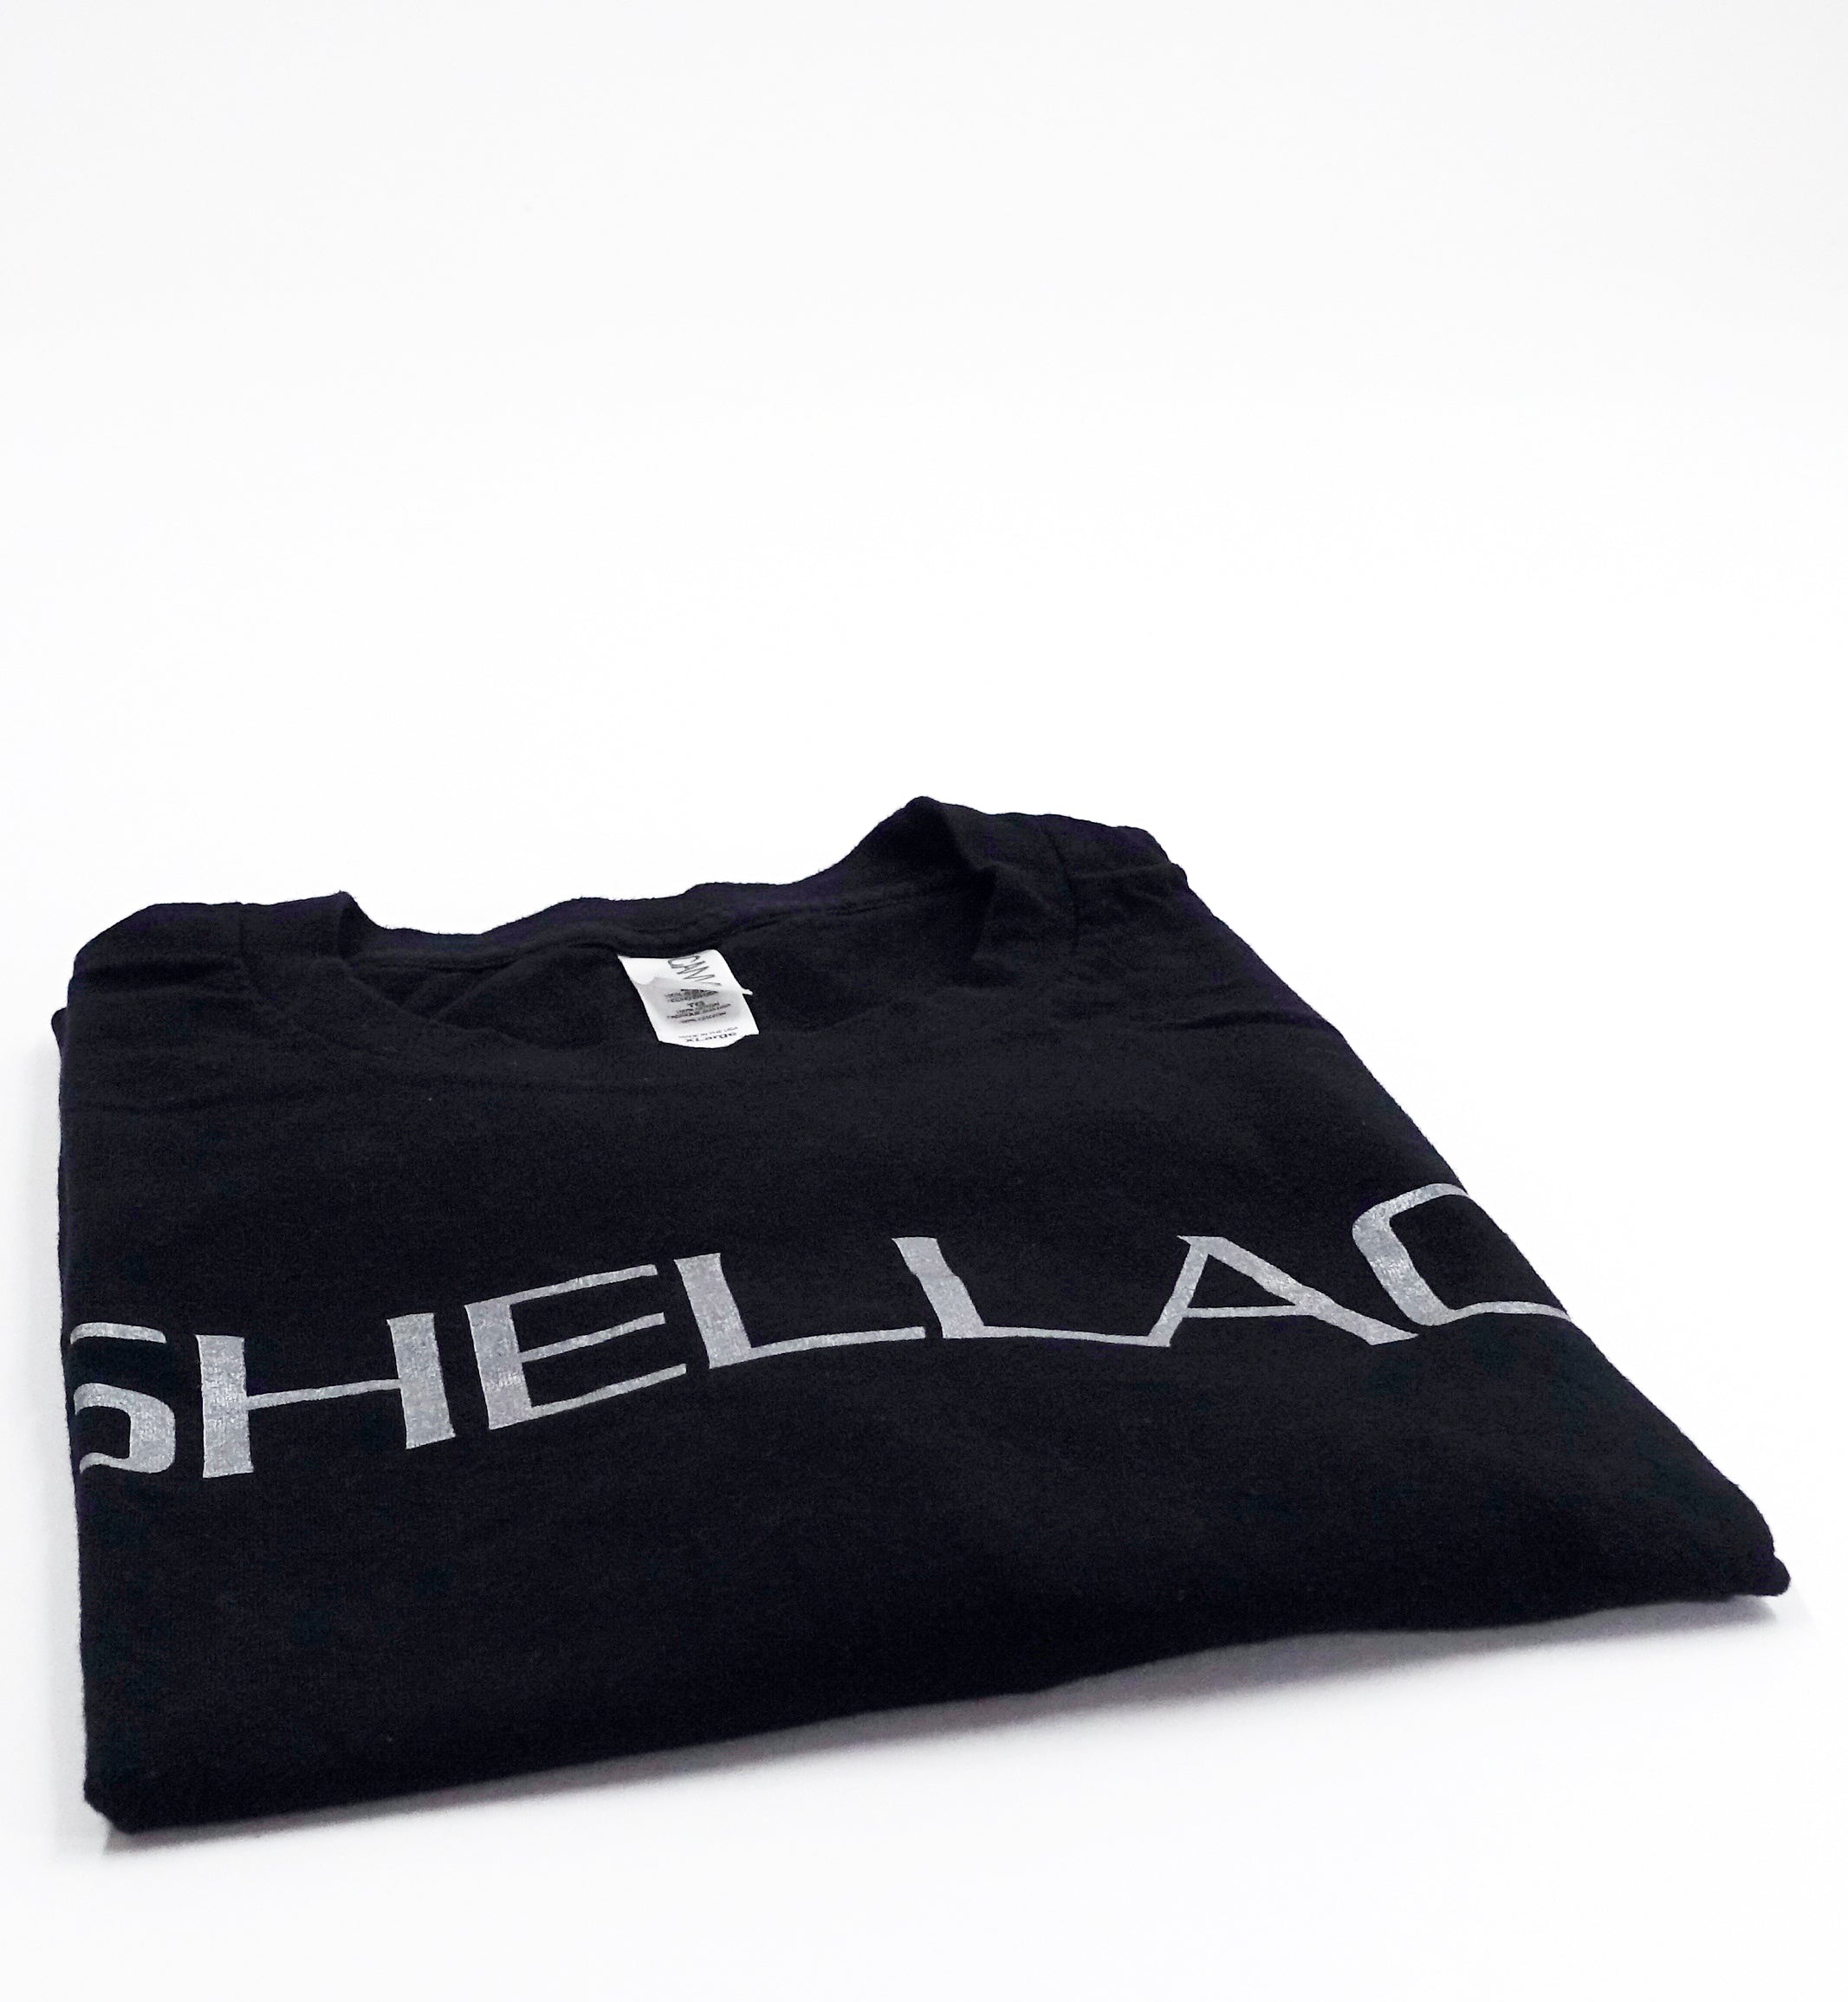 Shellac - The End Of Radio Tour Shirt Size XL